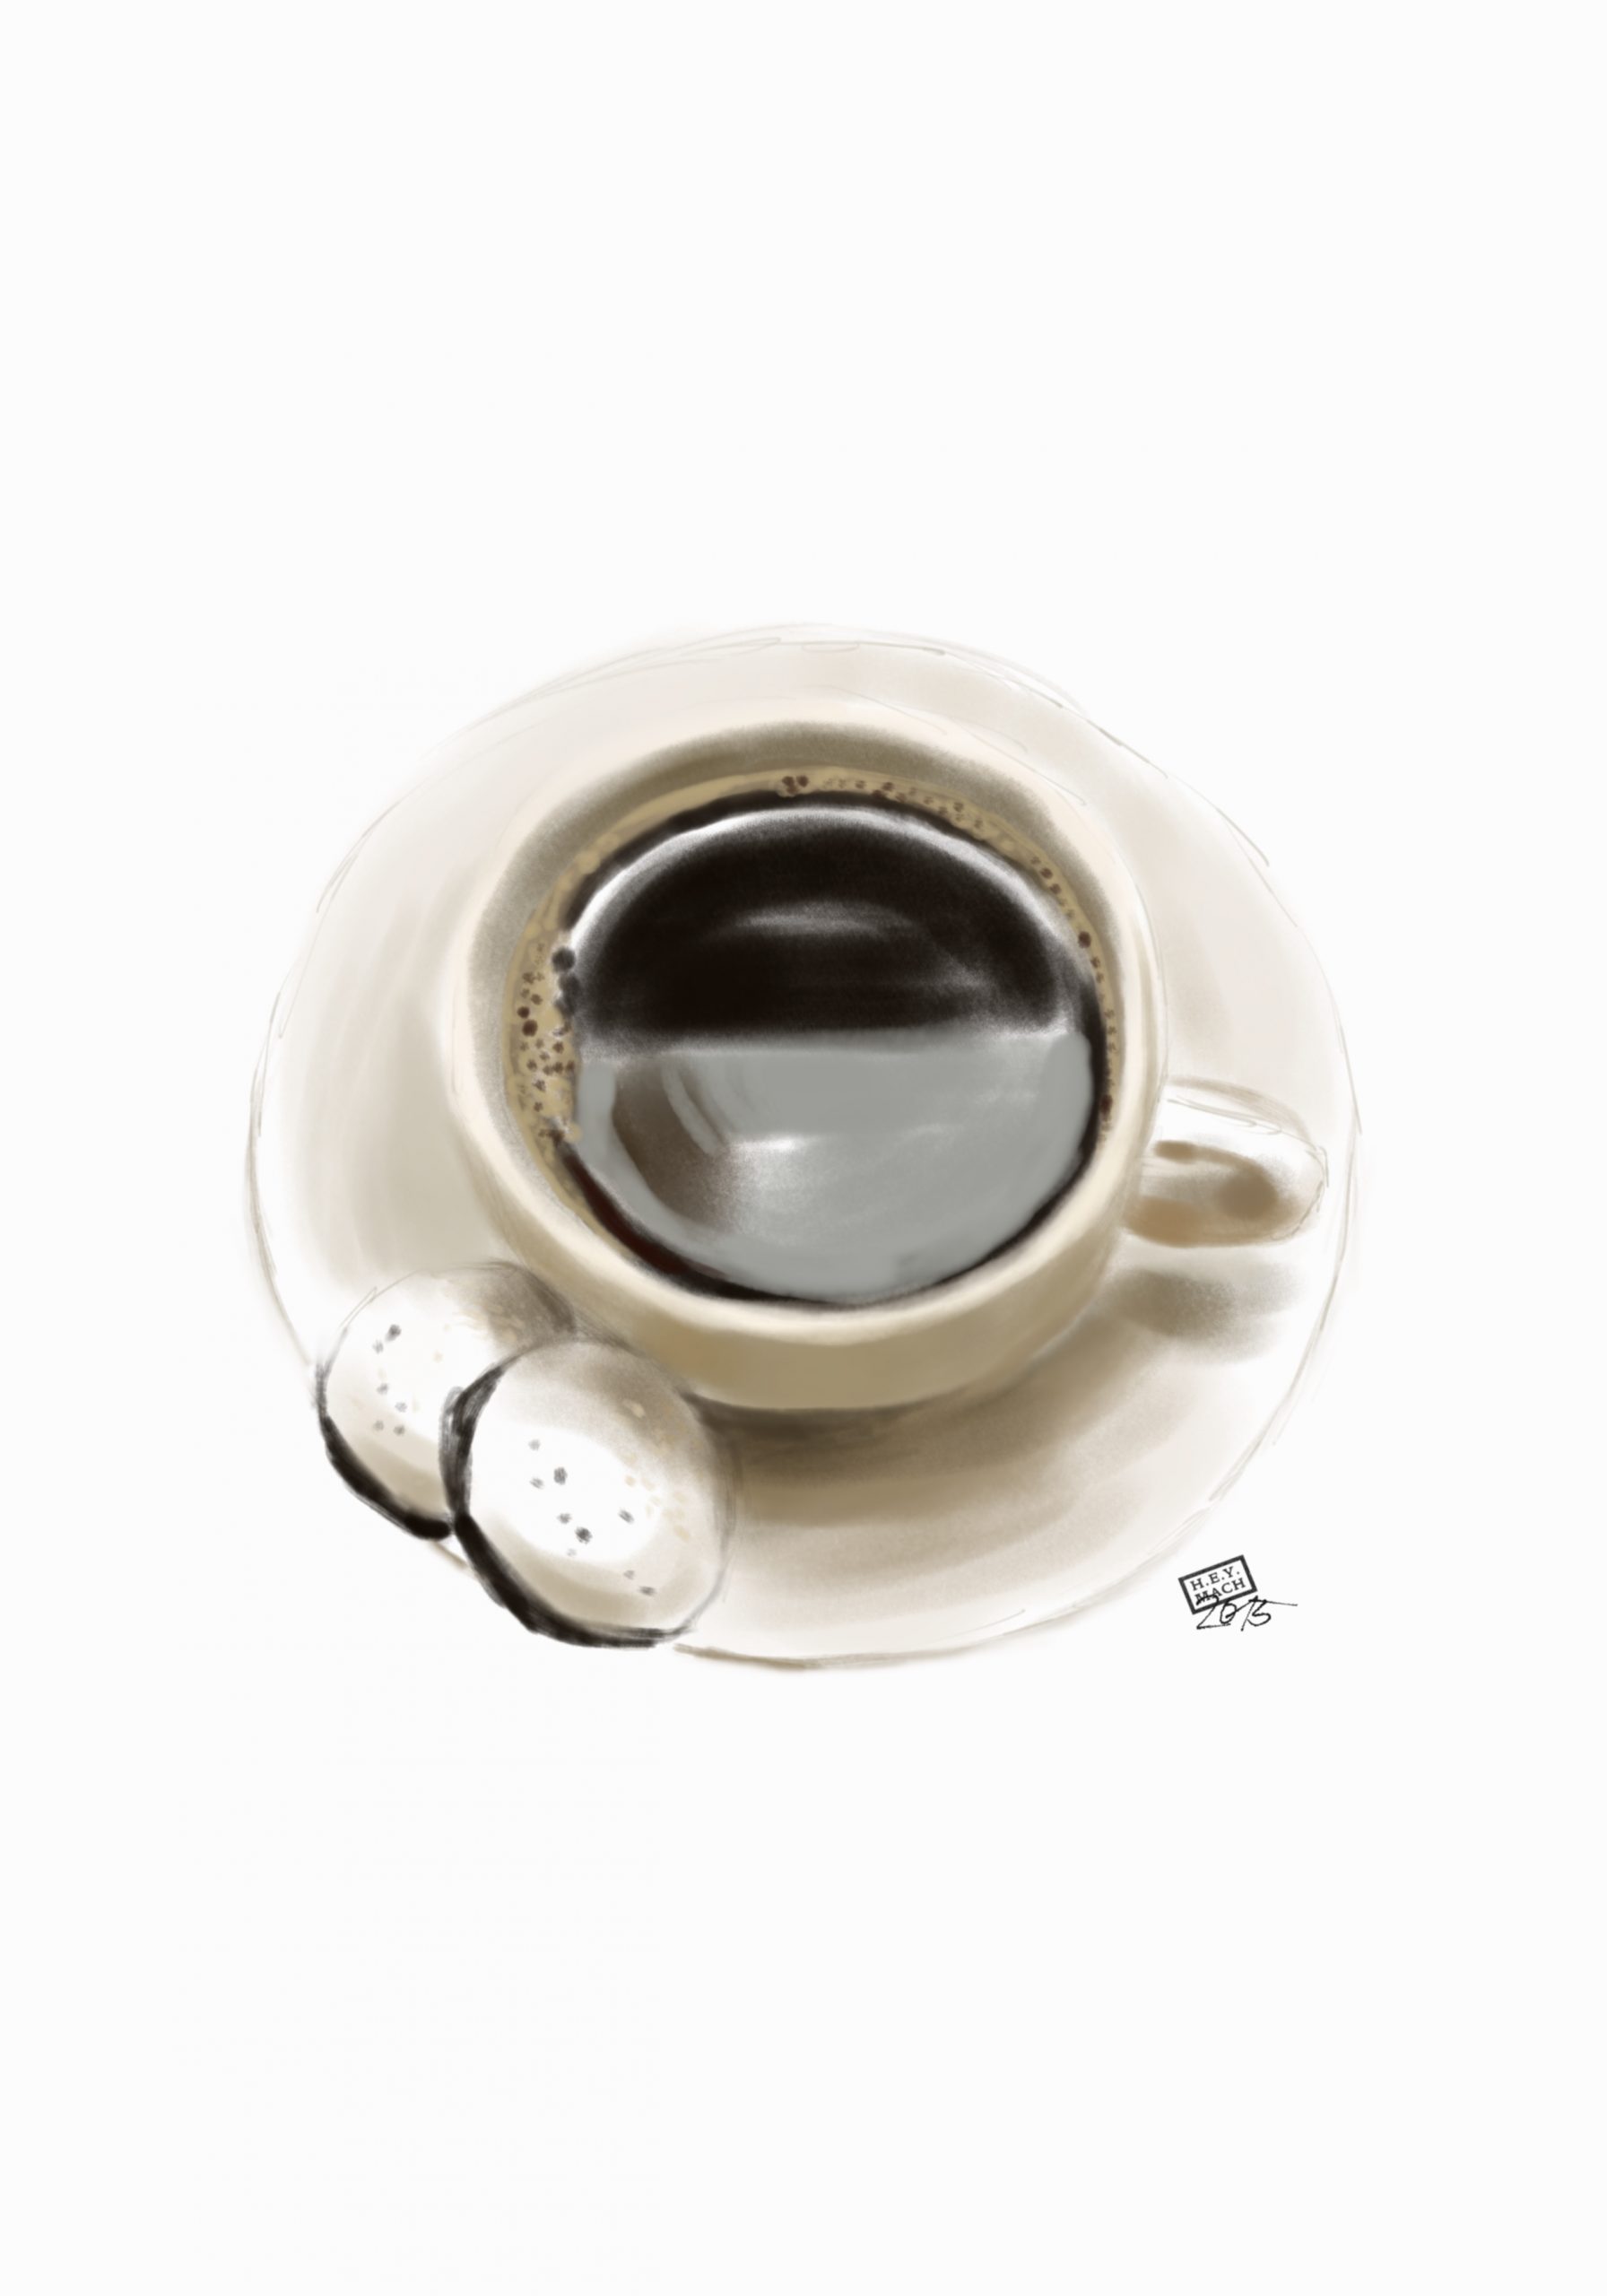 Kaffeetasse(c)kheymach